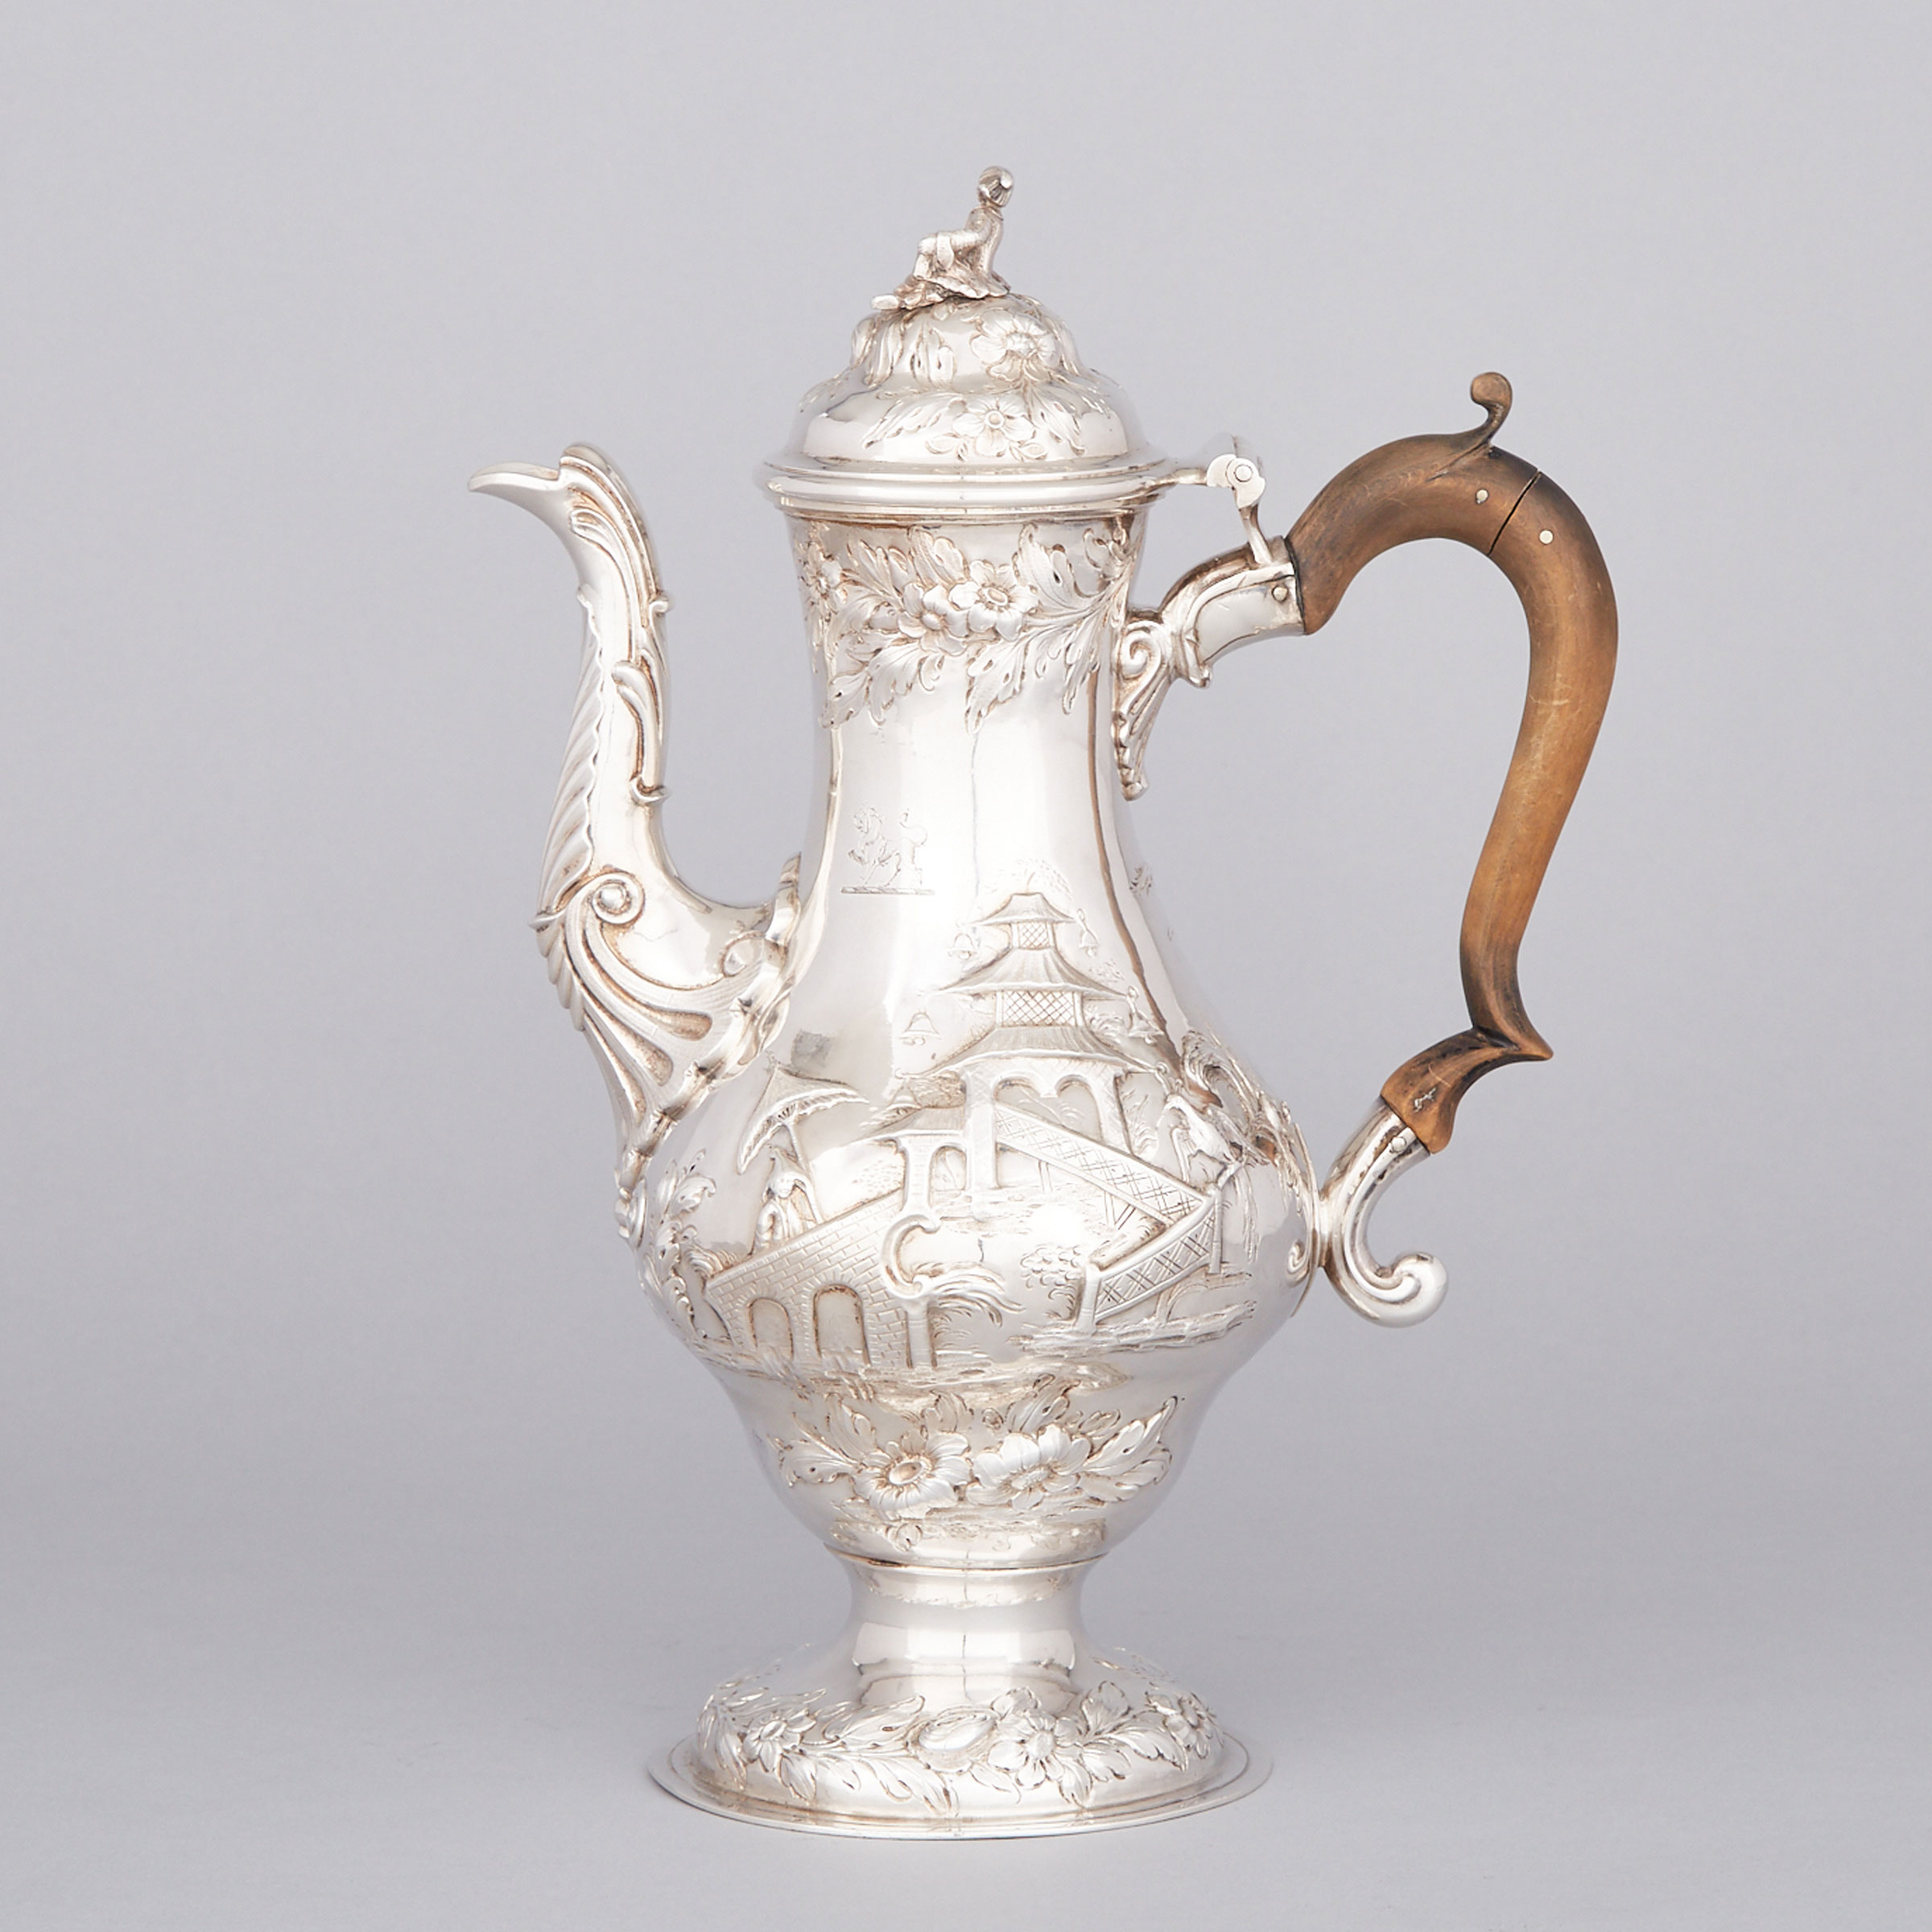 George III Silver Chinoiserie Coffee Pot, London, 1764